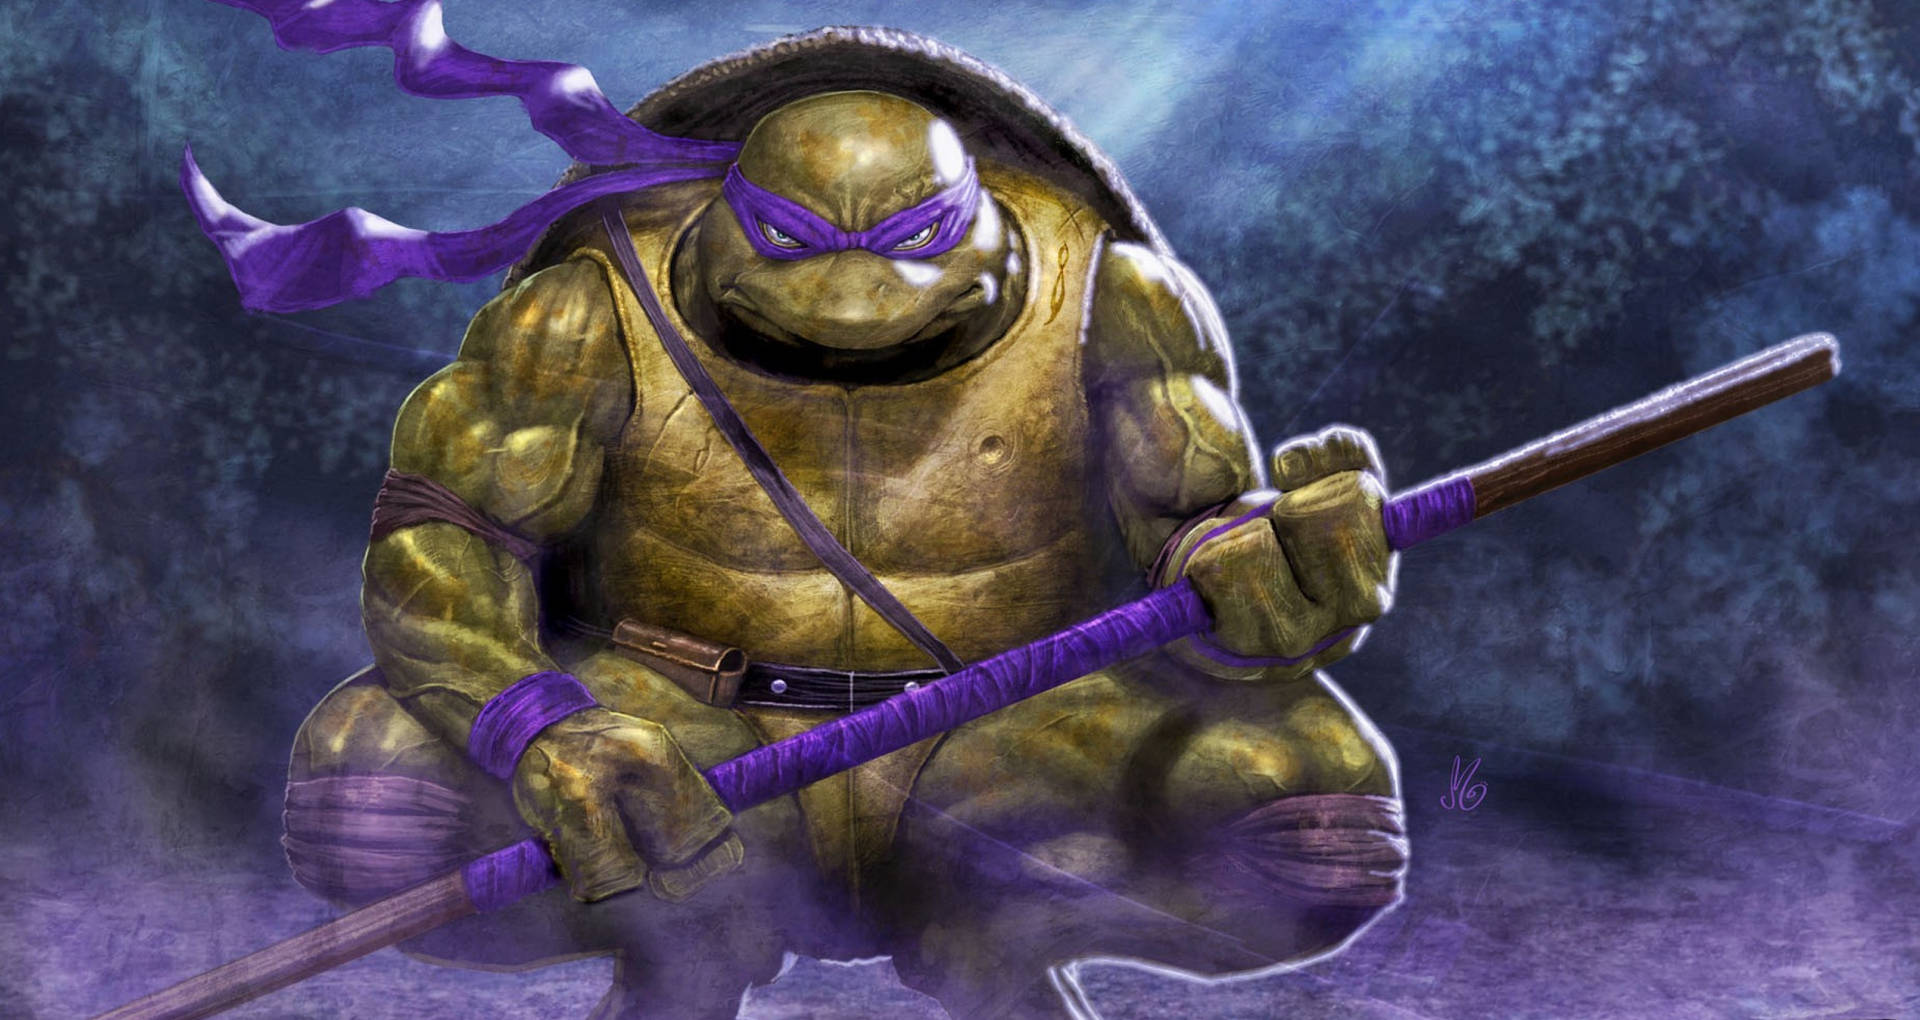 Ninja Turtle 3083 X 1638 Wallpaper